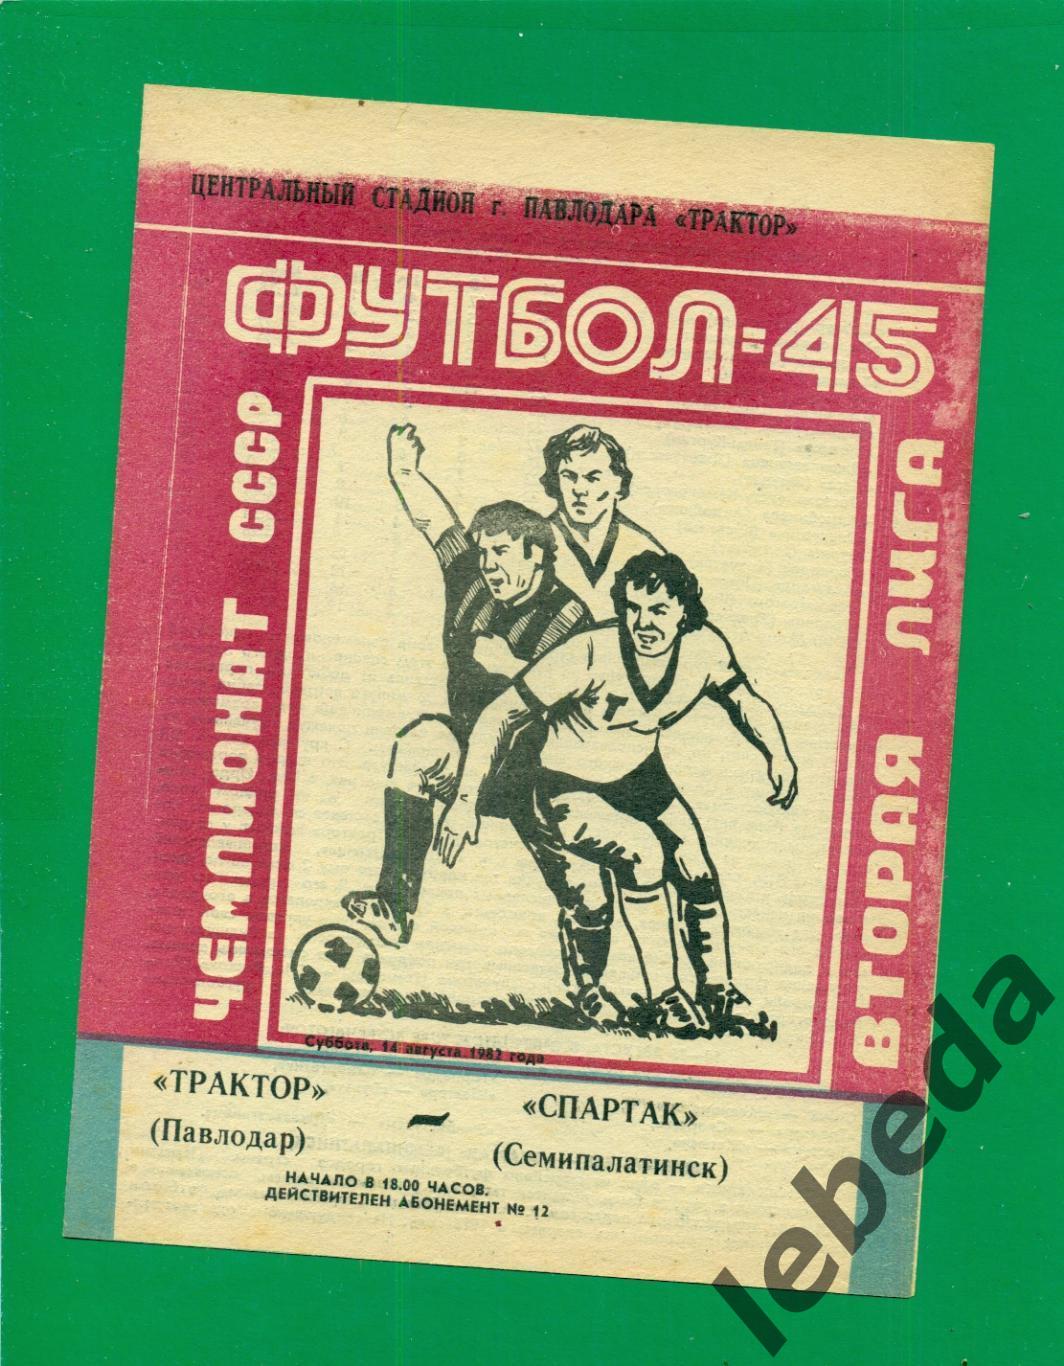 Трактор Павлодар - Спартак Семипалатинск - 1982 г. (14.08.82.)